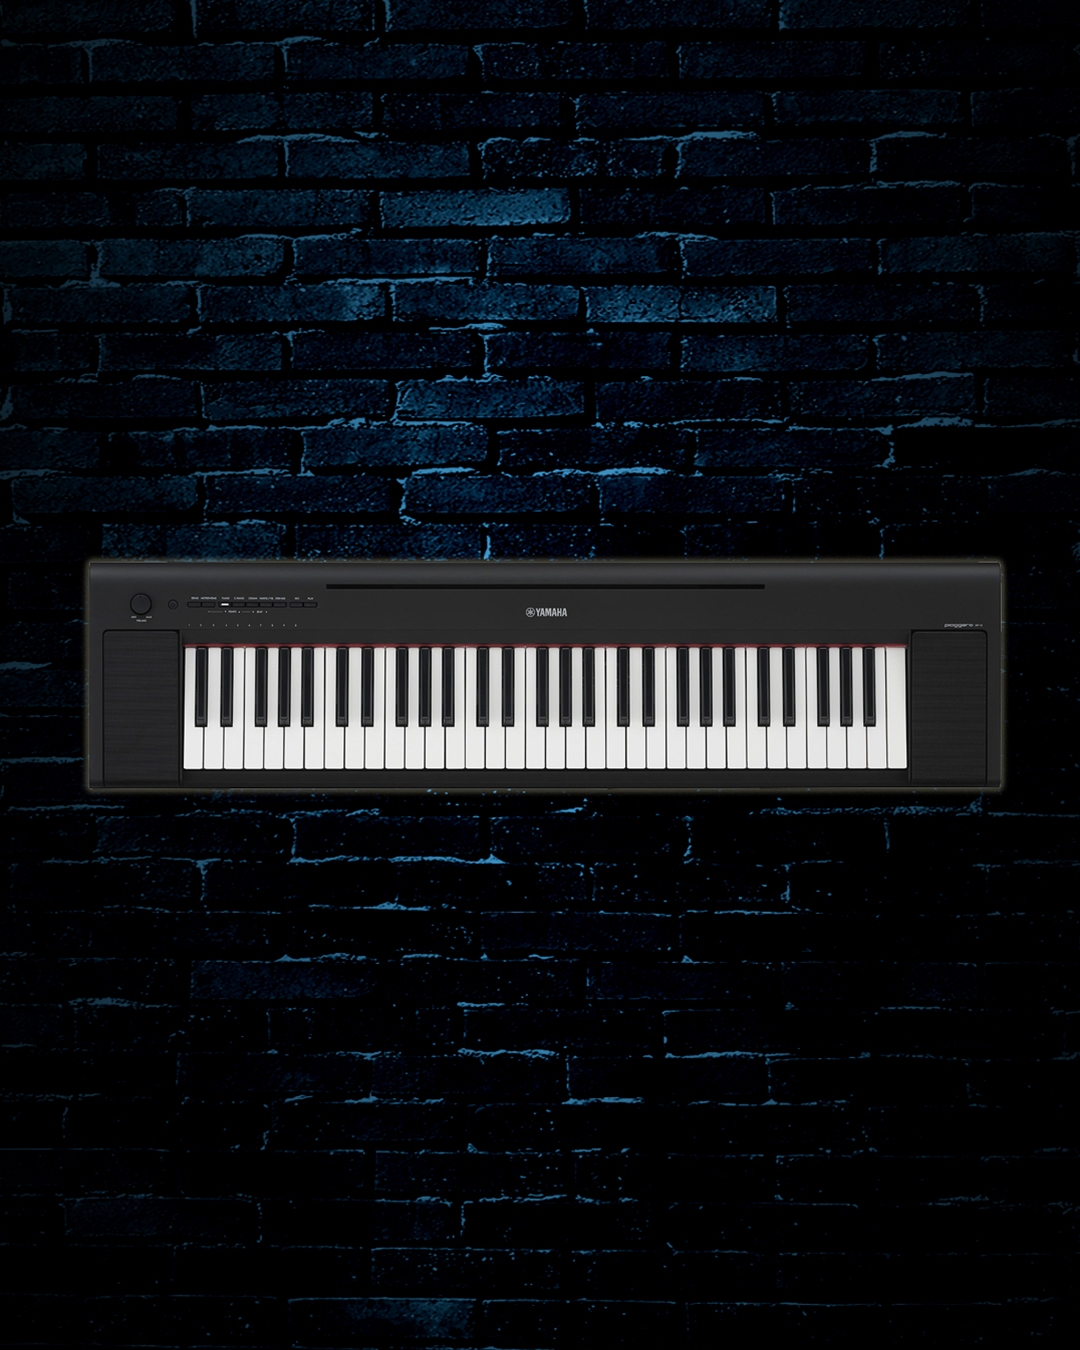 NP-15B PIAGGERO 61-KEY PORTABLE PIANO-STYLE KEYBOARD BLACK